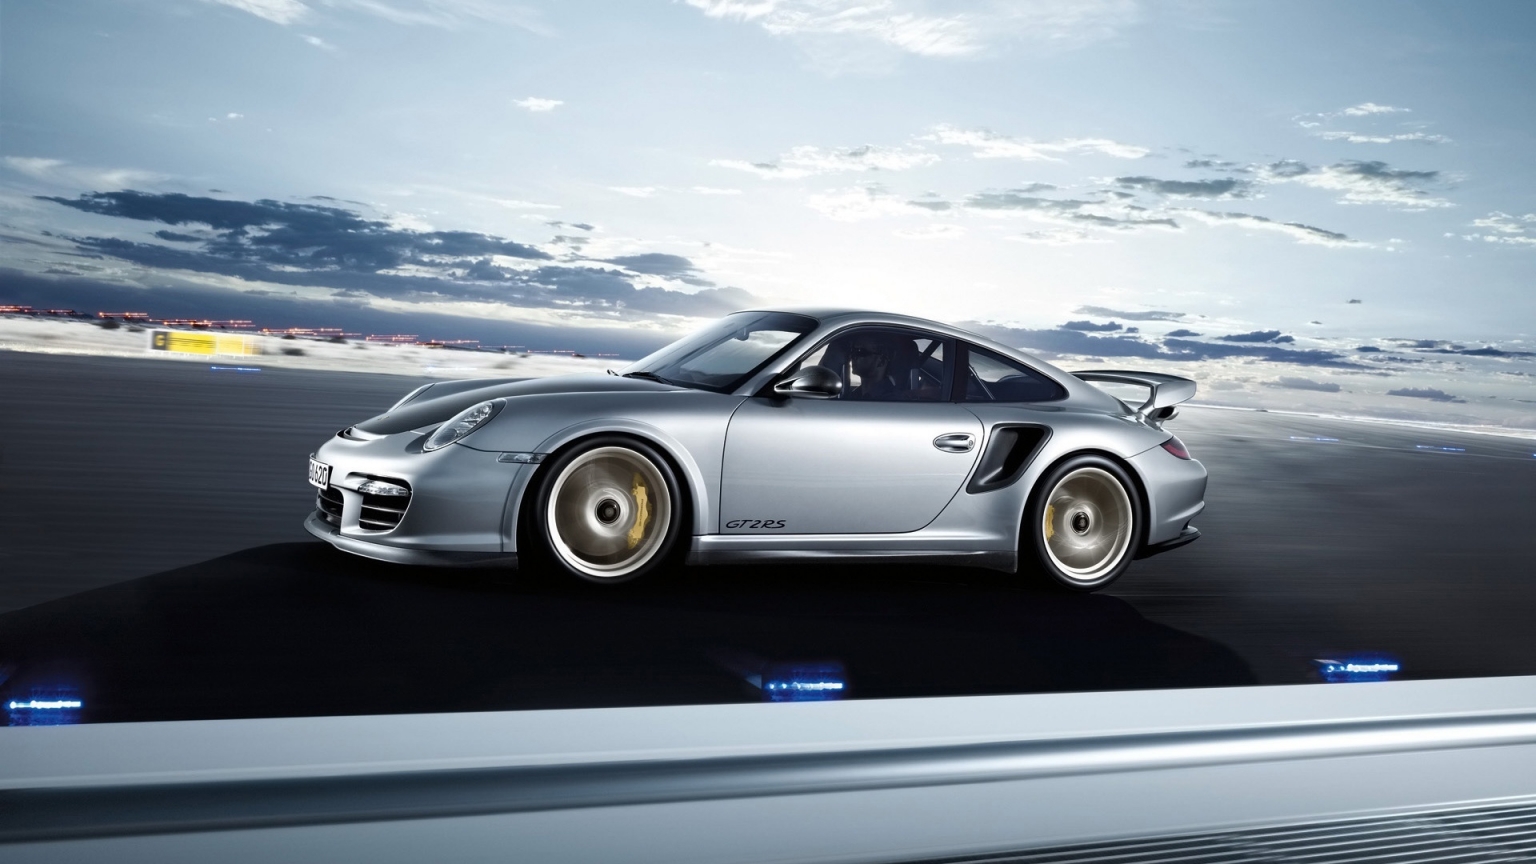 Porsche 911 GT2 RS 2011 Speed for 1536 x 864 HDTV resolution